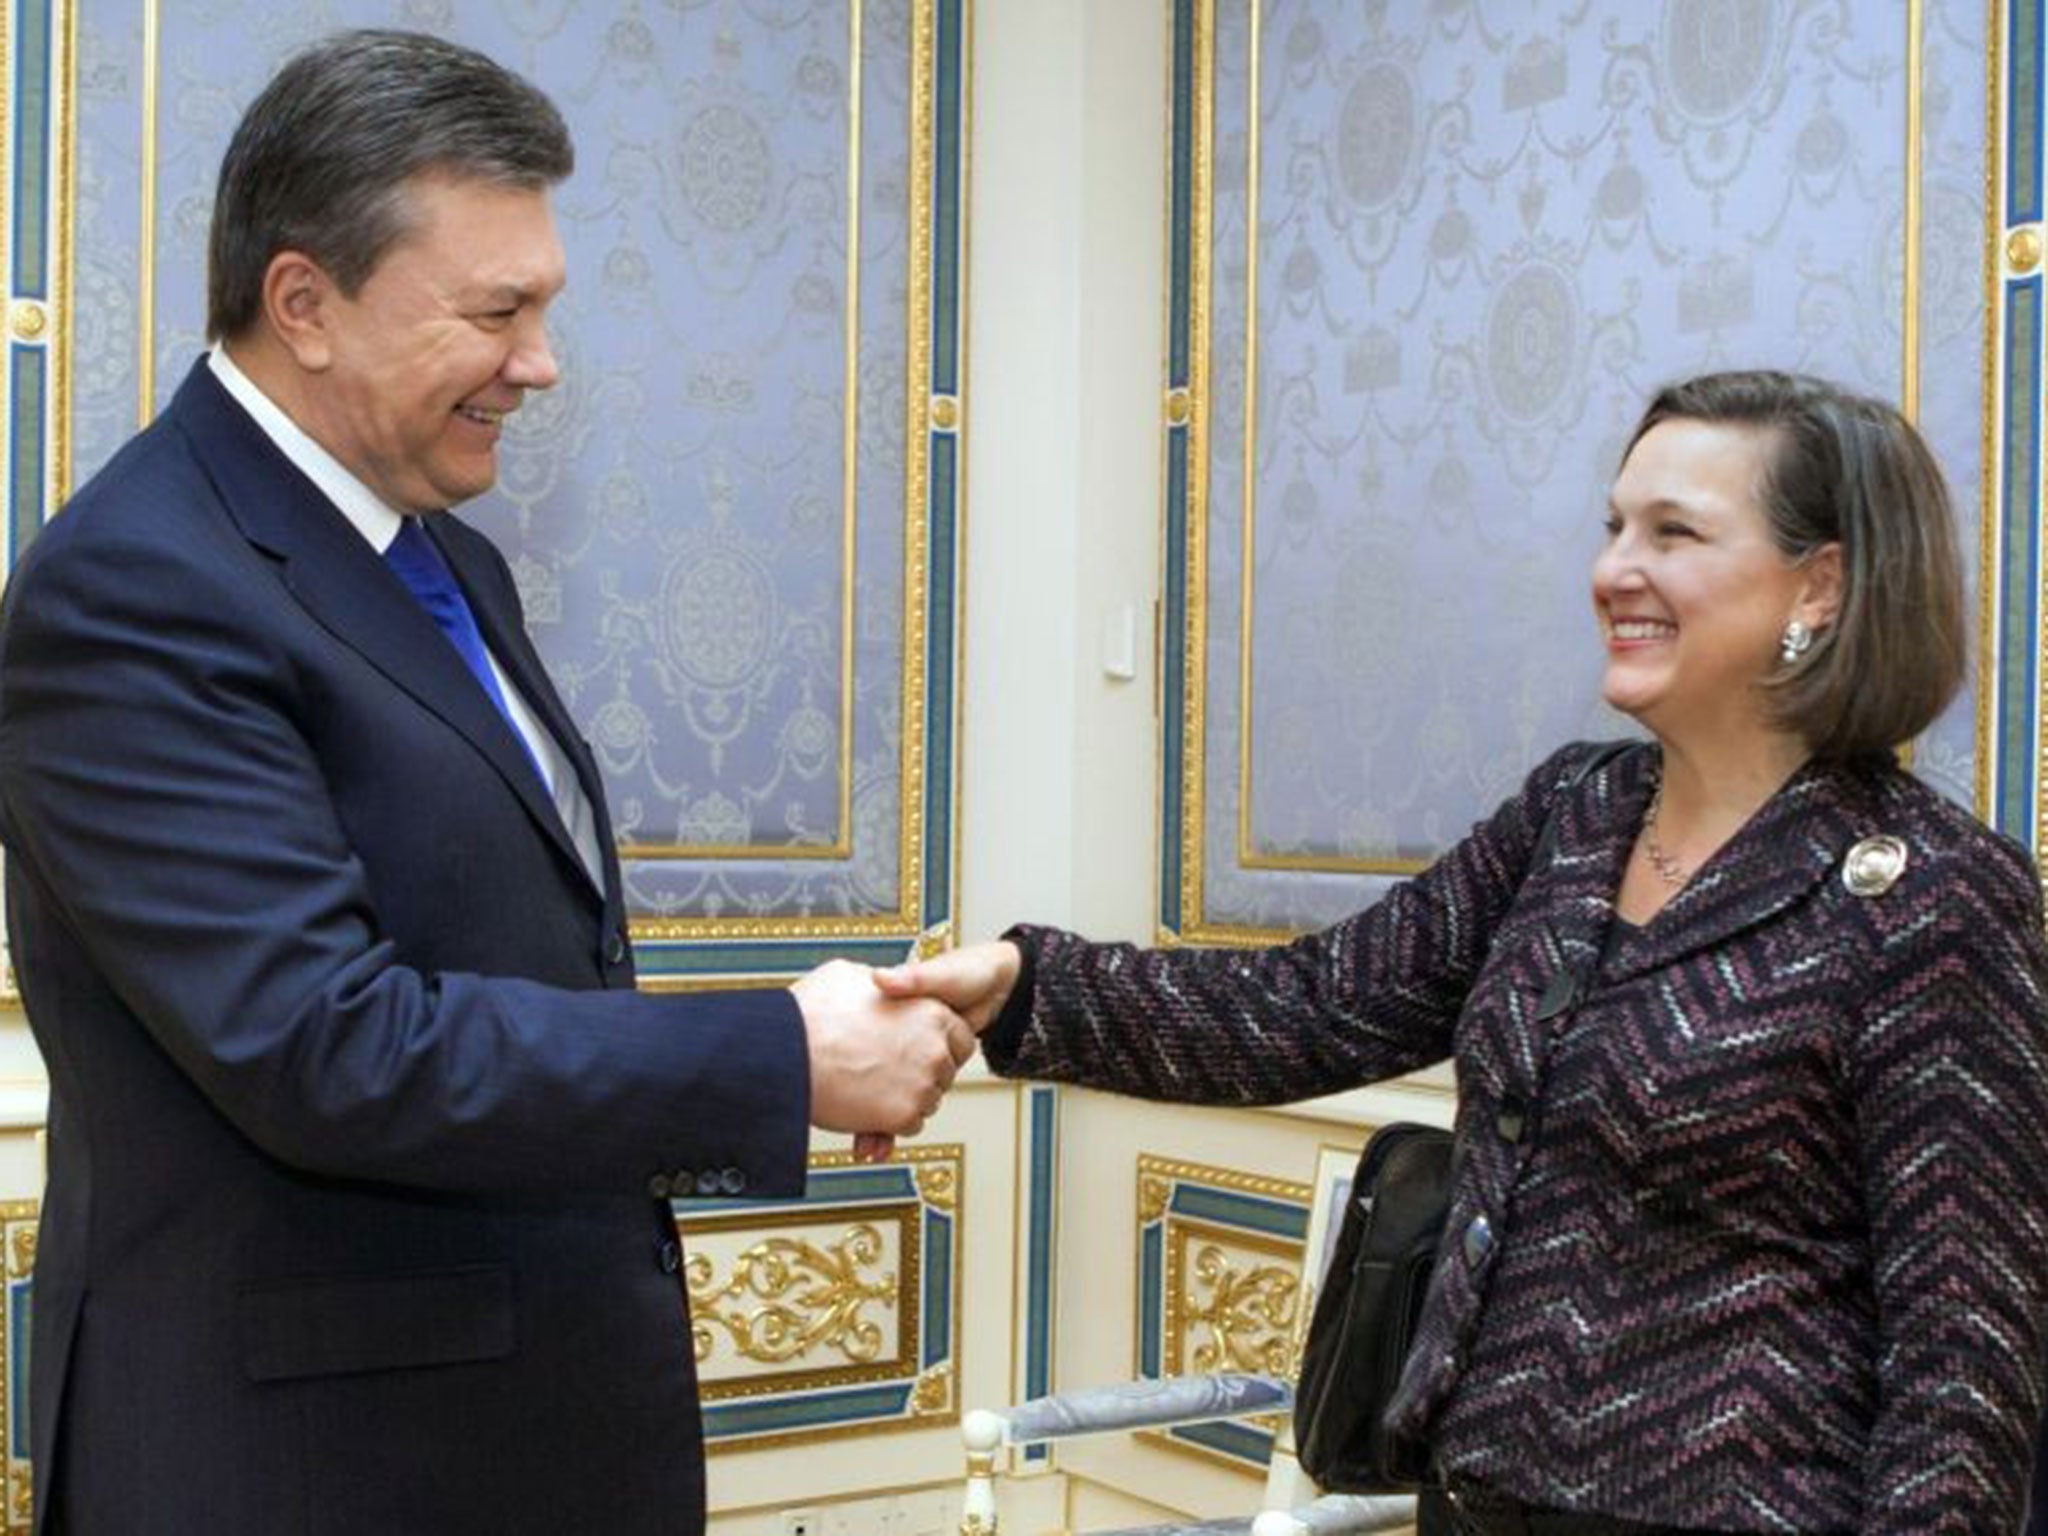 Victoria Nuland greets the Ukrainian president Viktor Yanukovych